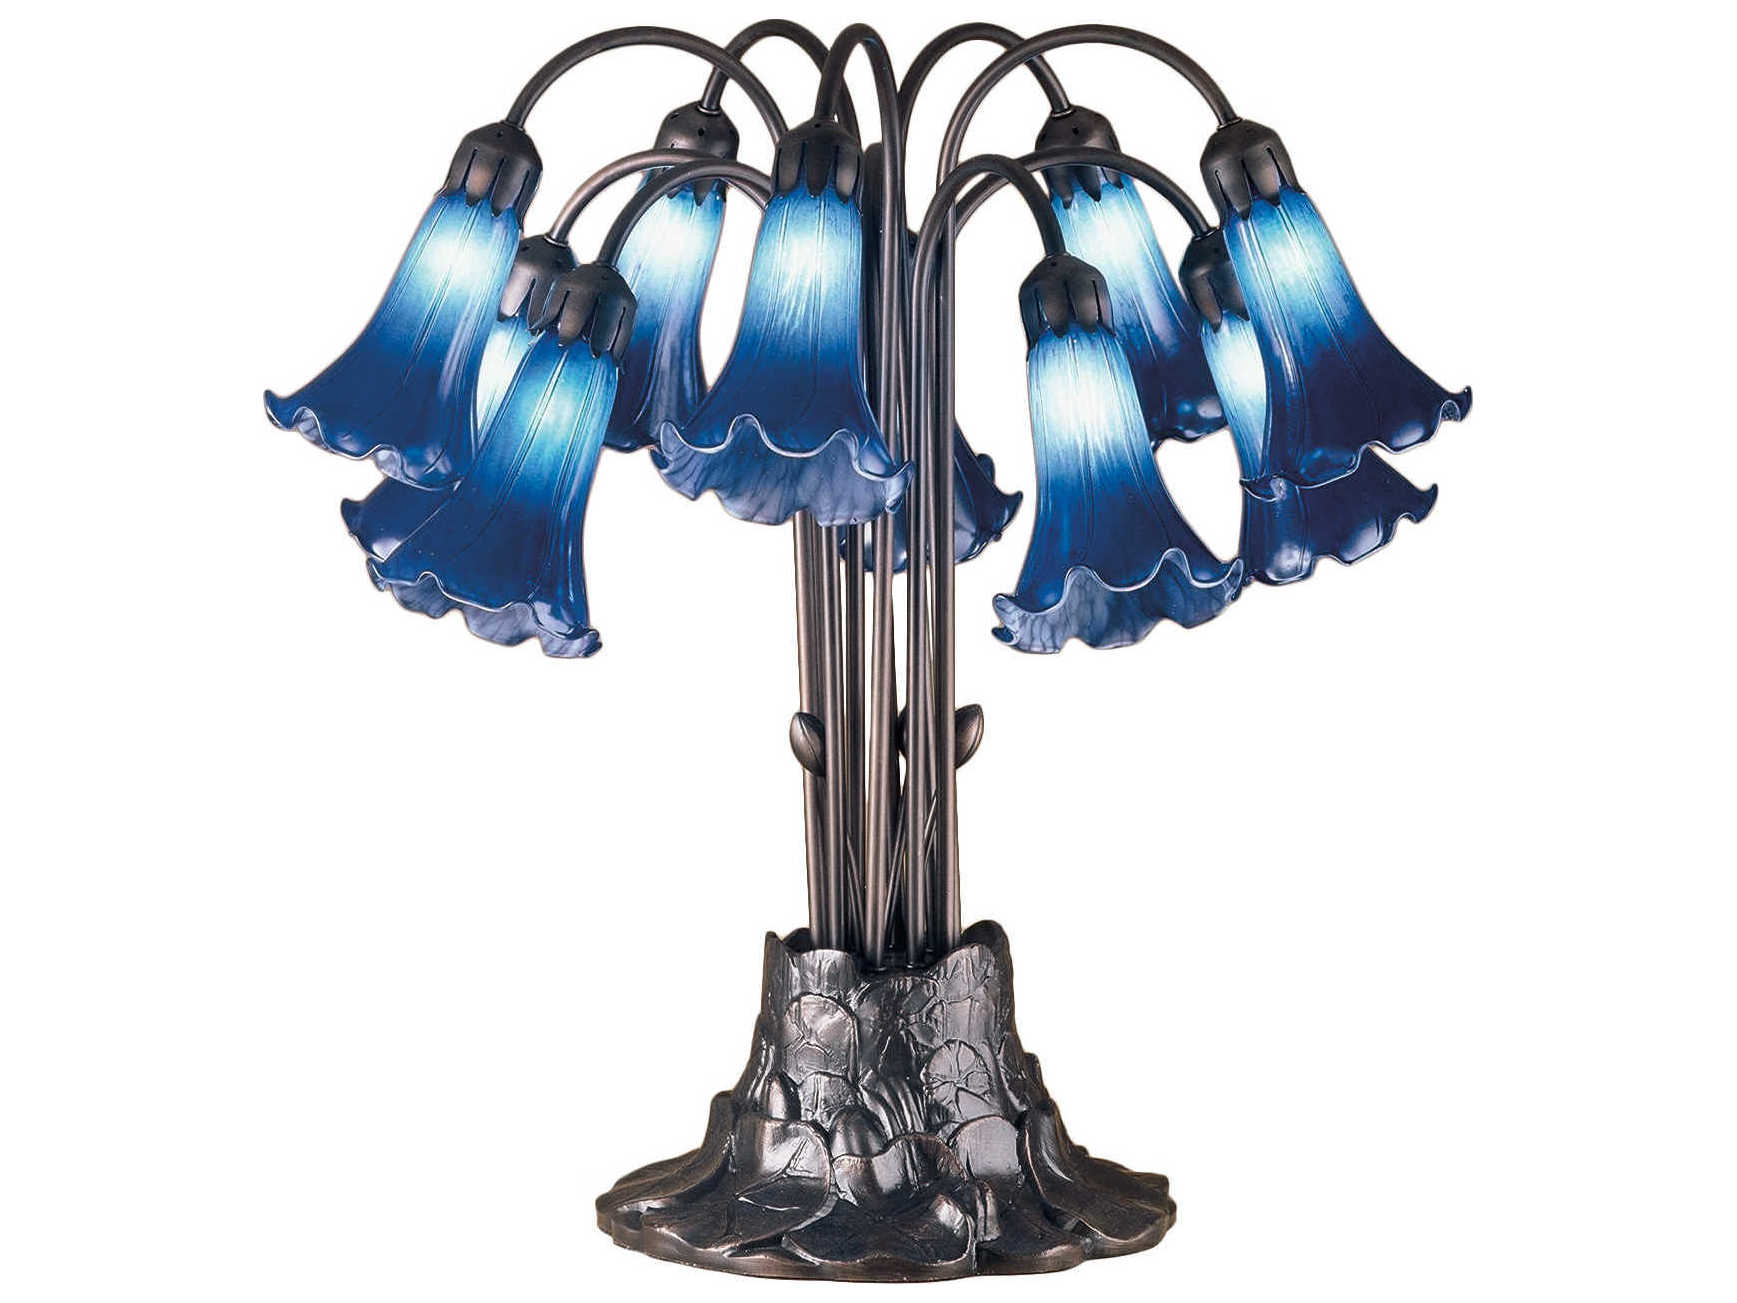 Tiffany lily lamp shades